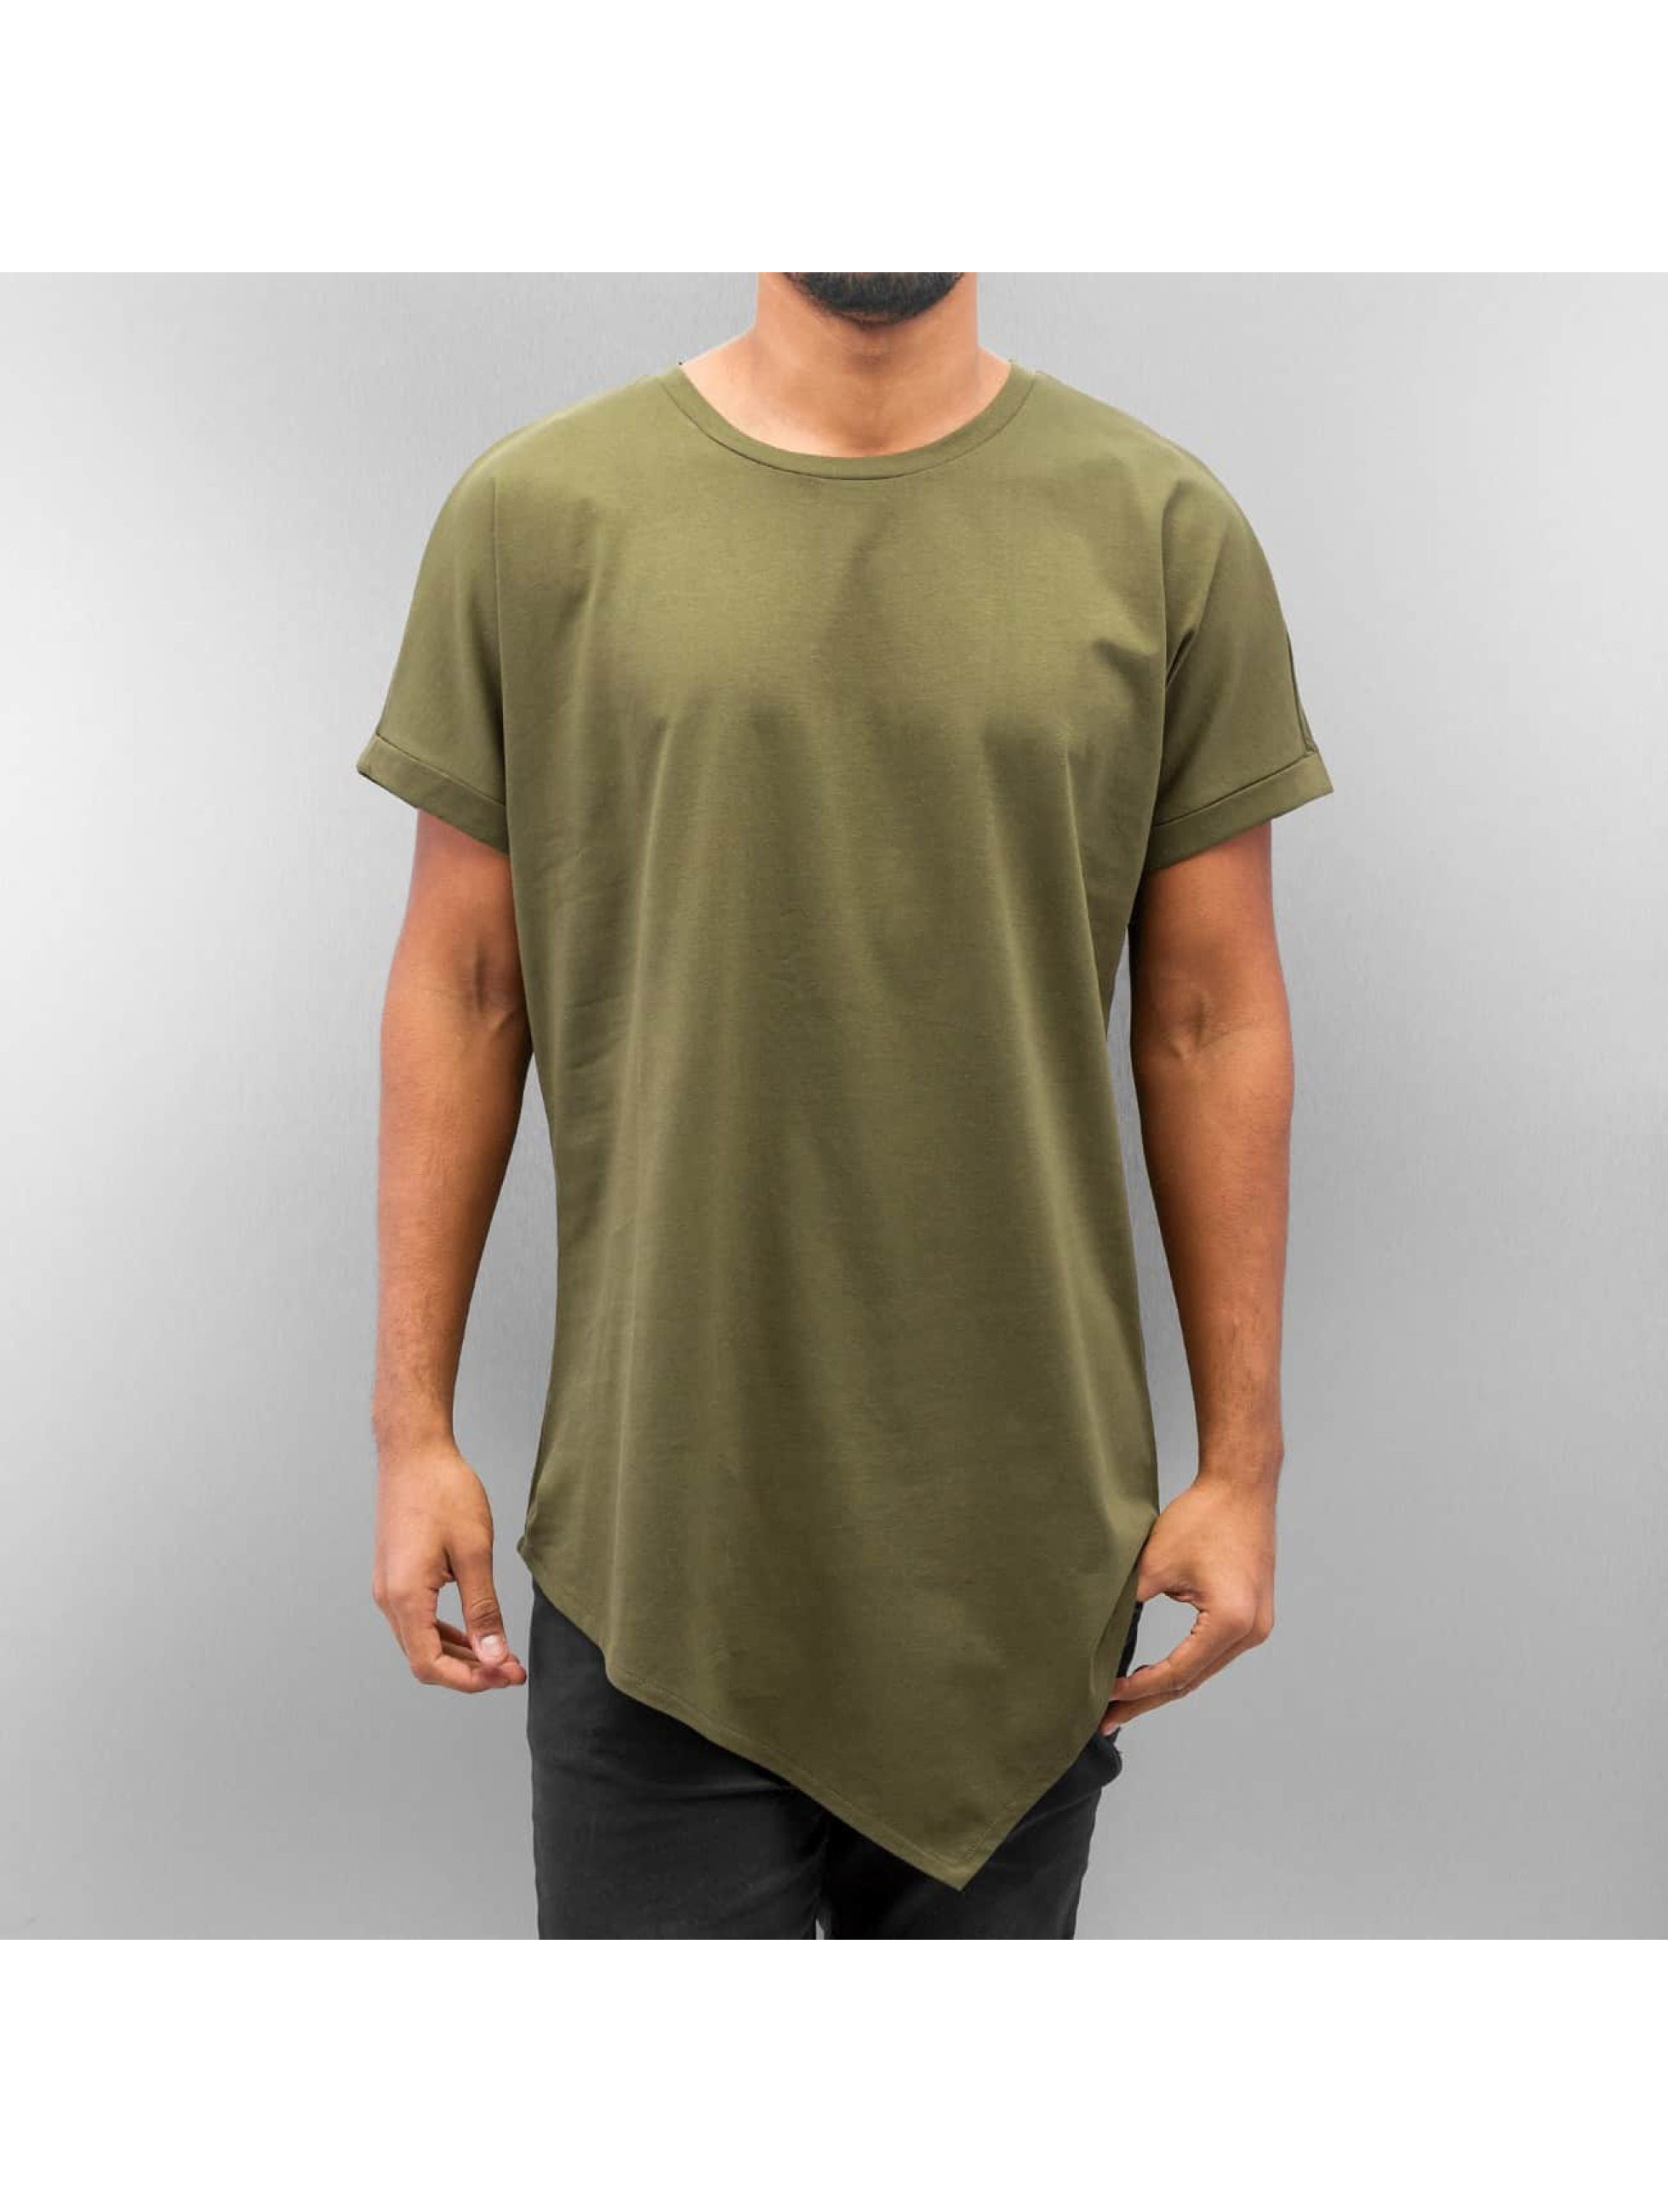 Urban Classics bovenstuk / t-shirt Asymetric Long in olijfgroen